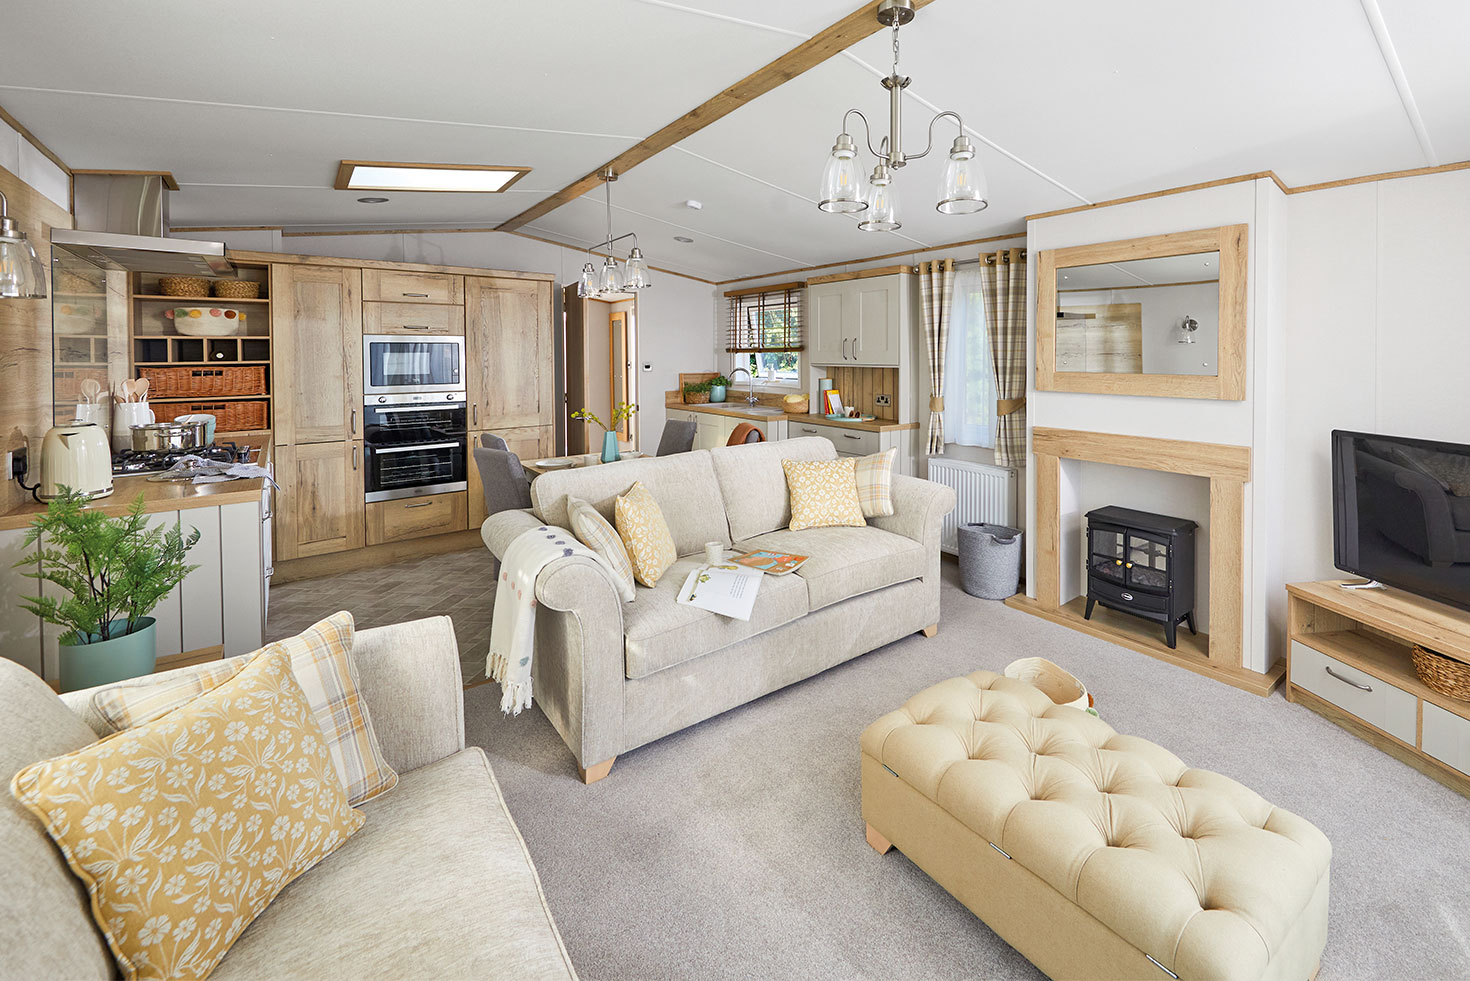 ABI Ambleside Premier 2022, brand new static caravan holiday lodge for sale Lake District